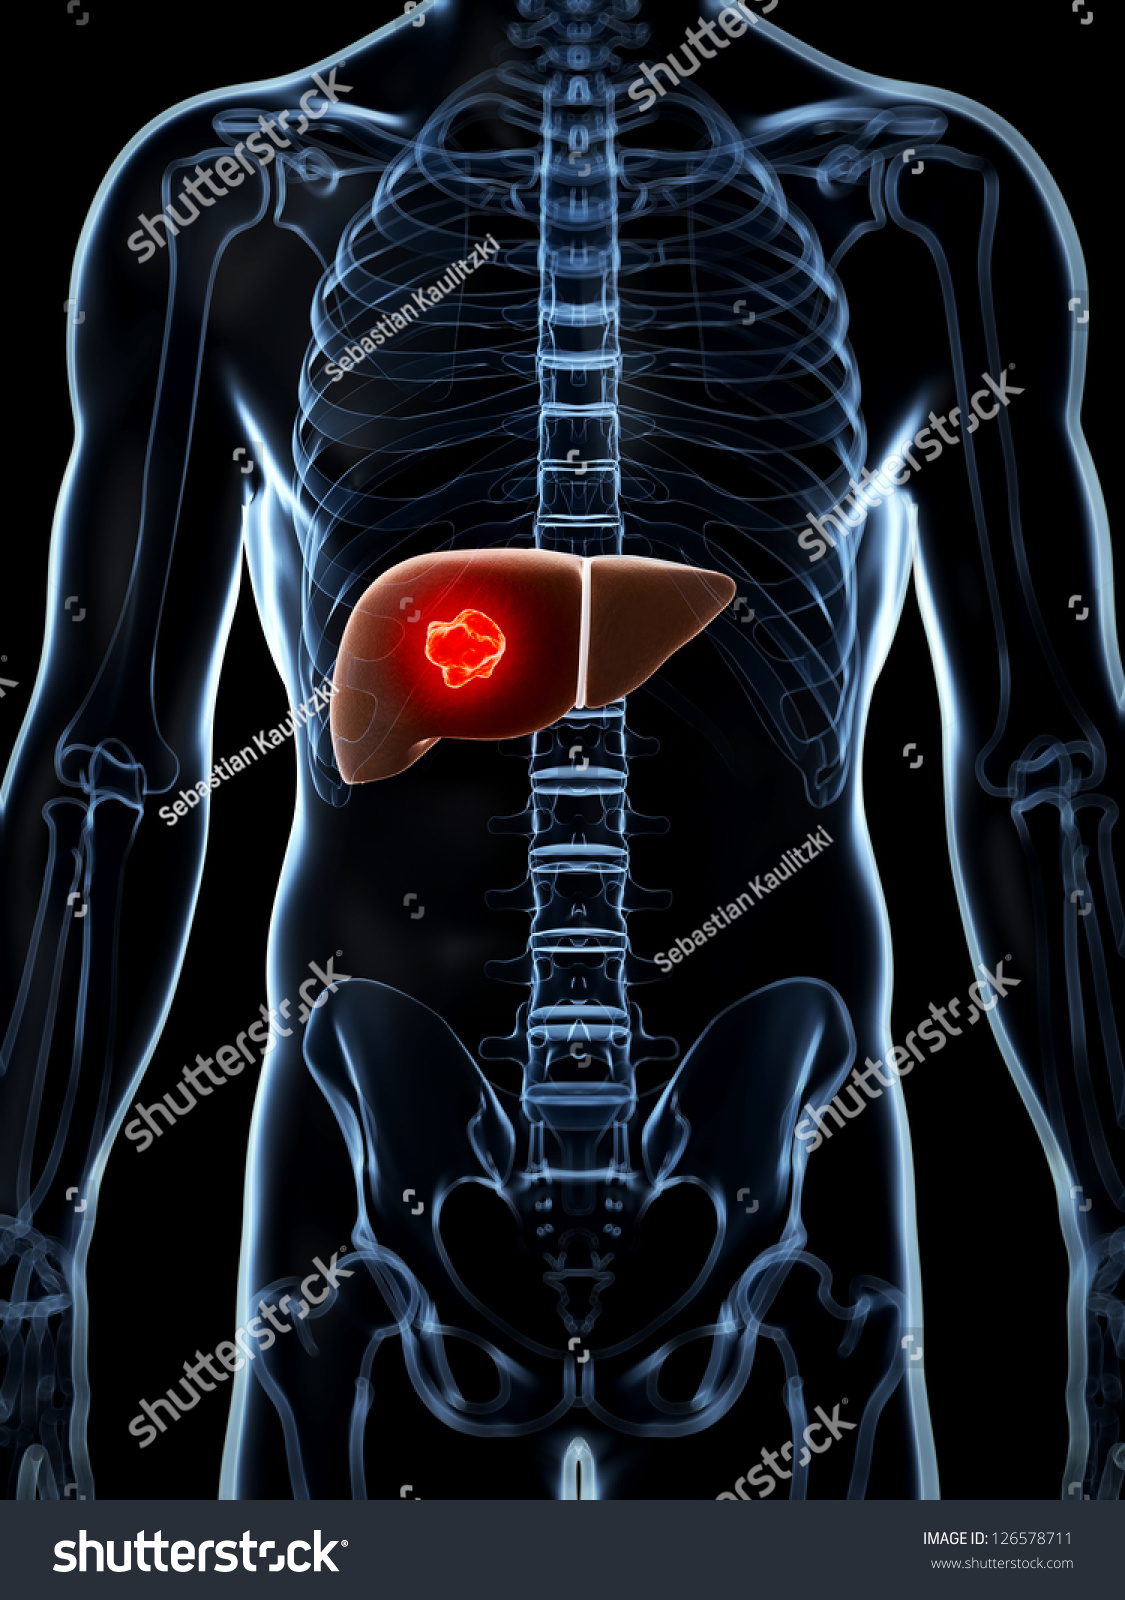 3d Rendered Illustration Of The Male Liver - 126578711 : Shutterstock